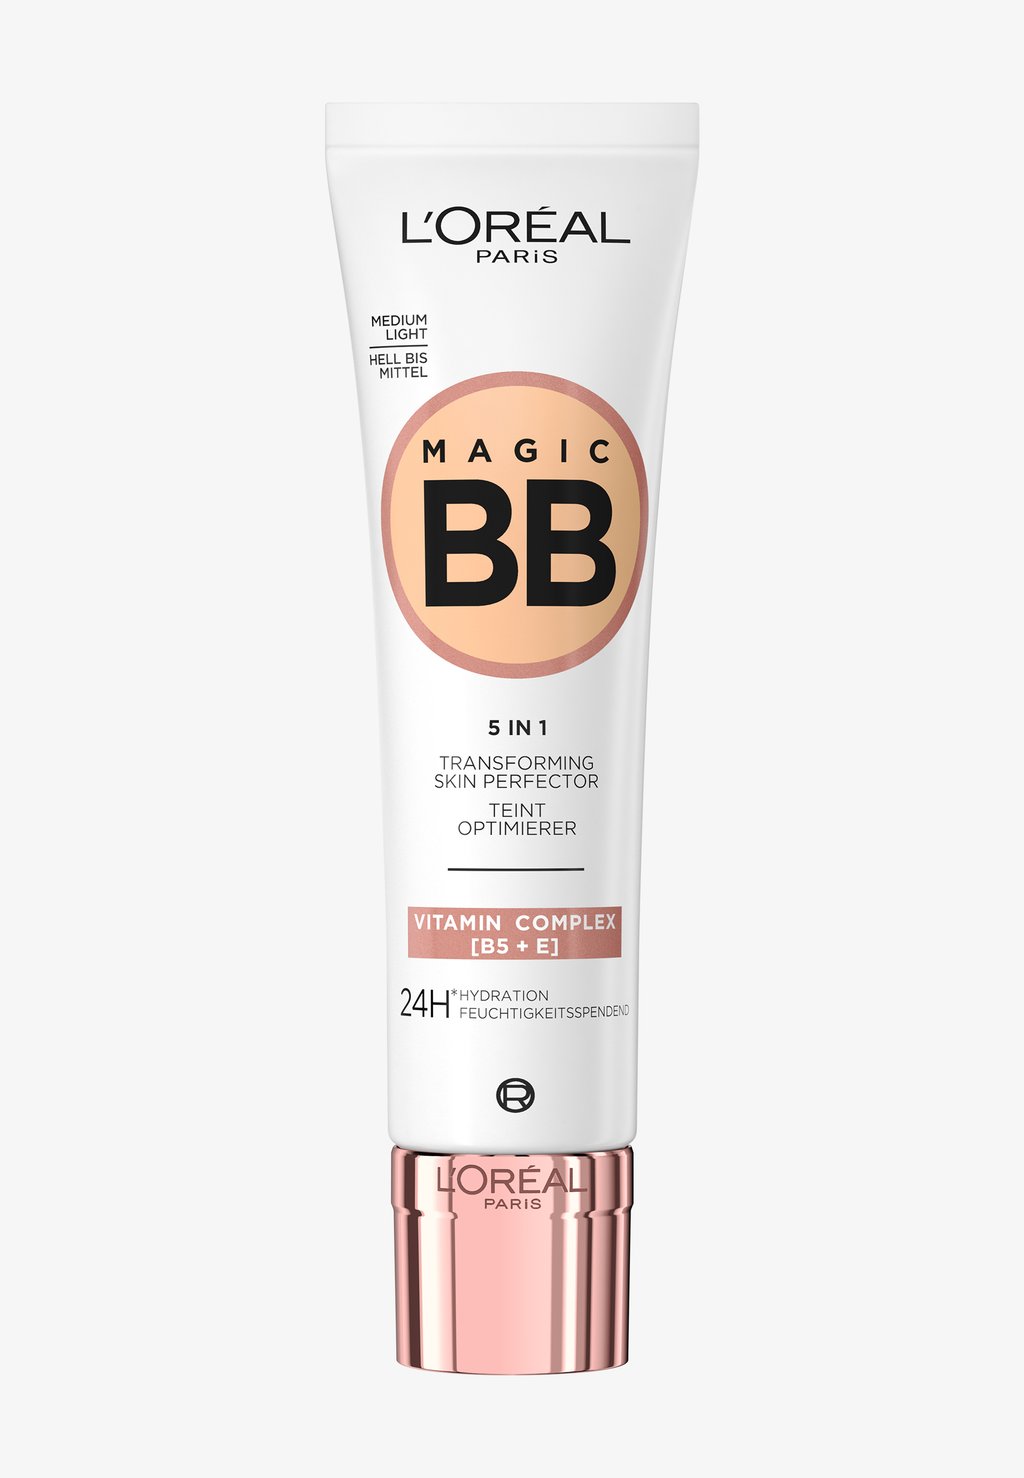 BB Creme Magic Bb Hell Bis Mittel L'Oréal Paris, цвет 03 medium light